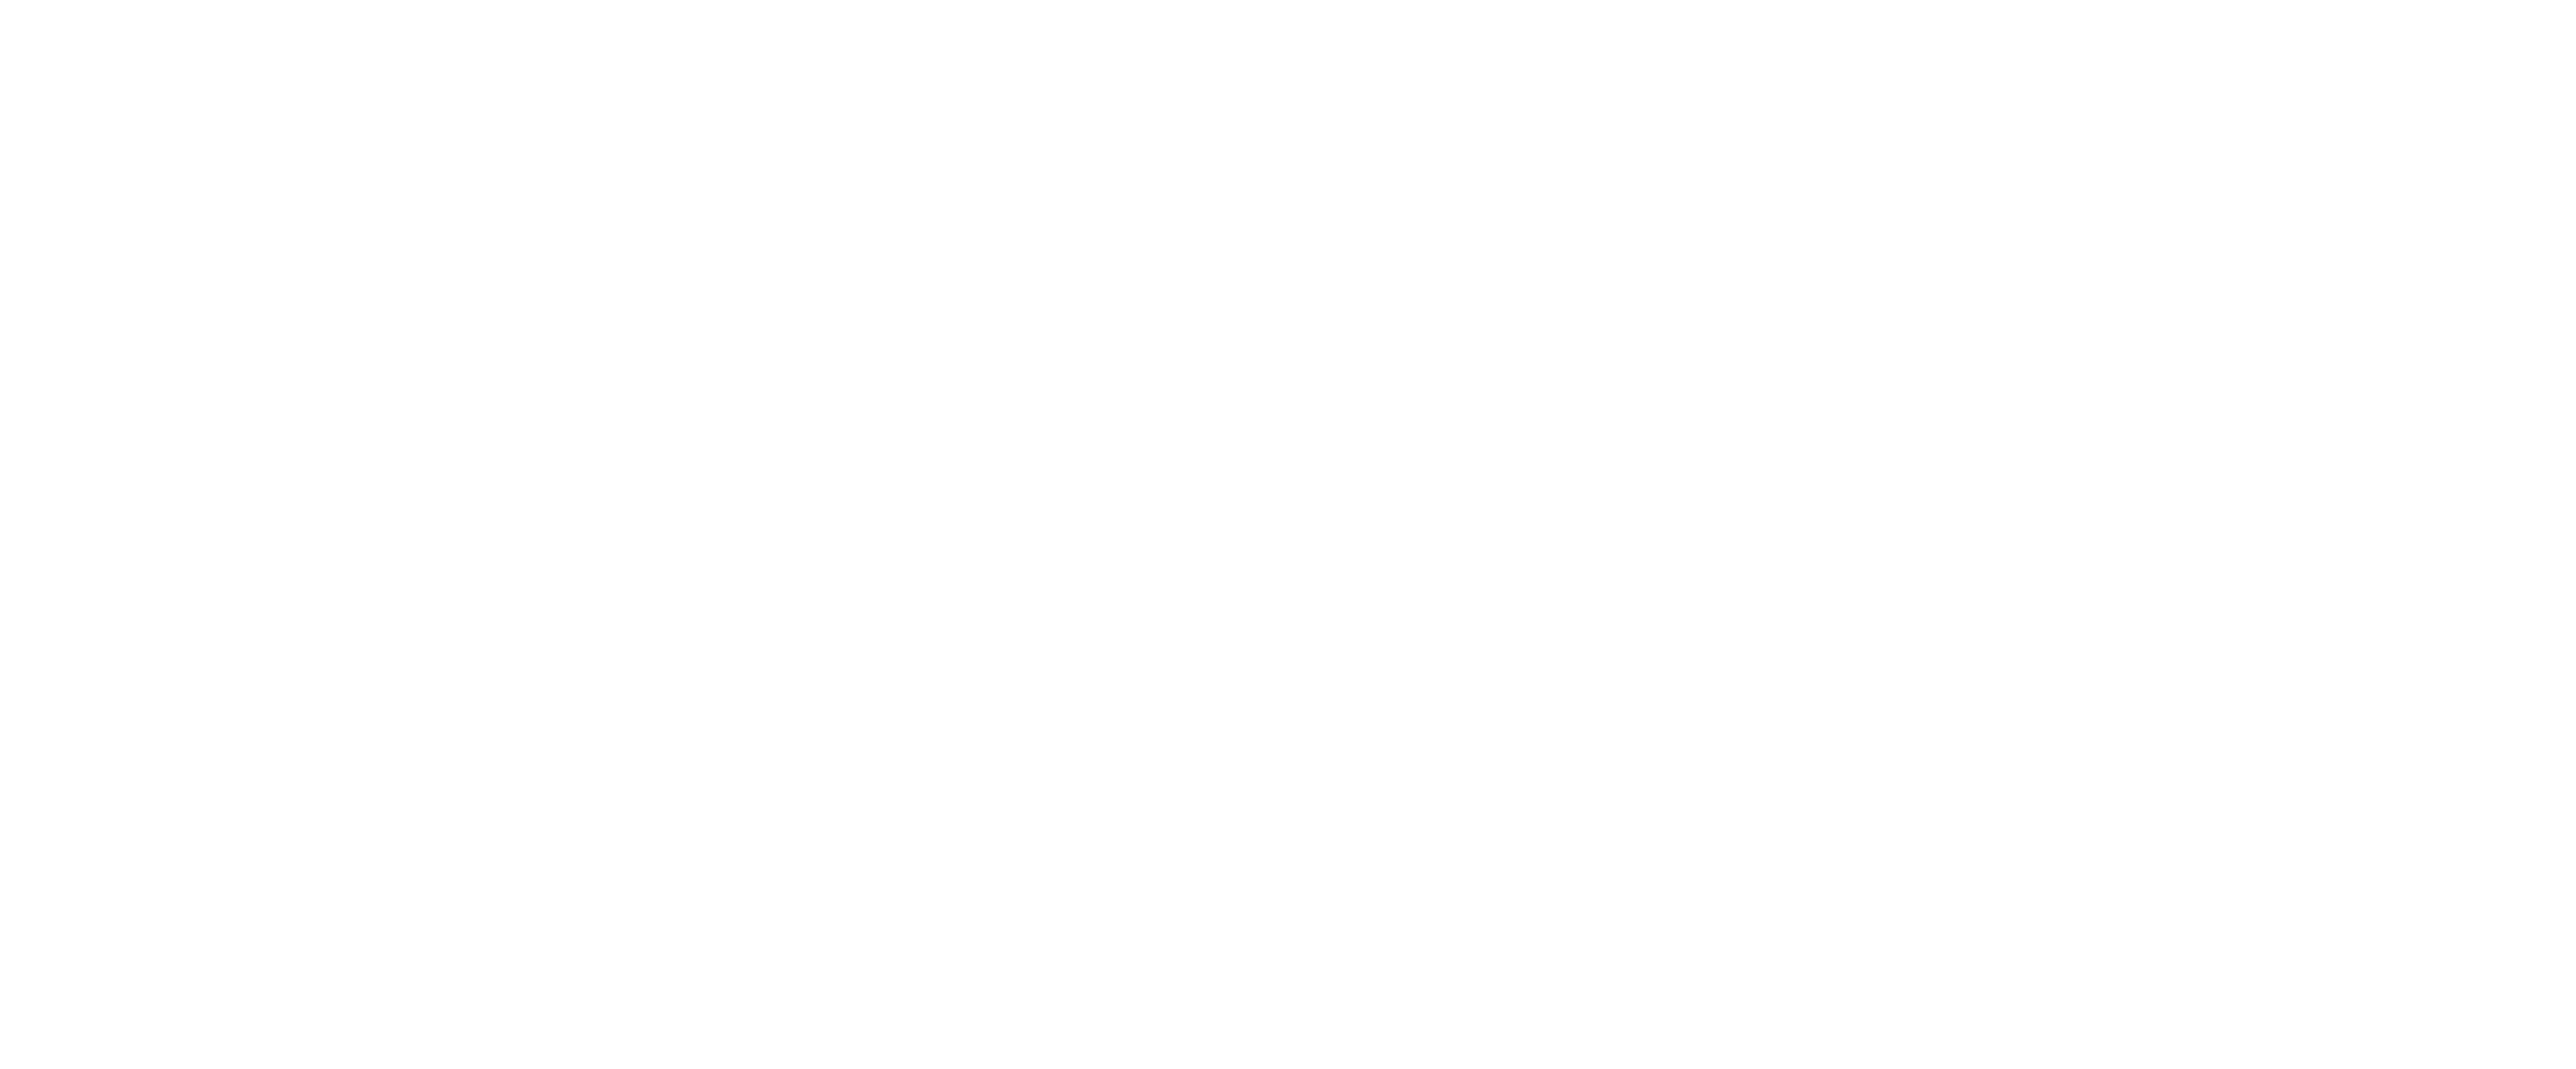 Erin Brockovich logo